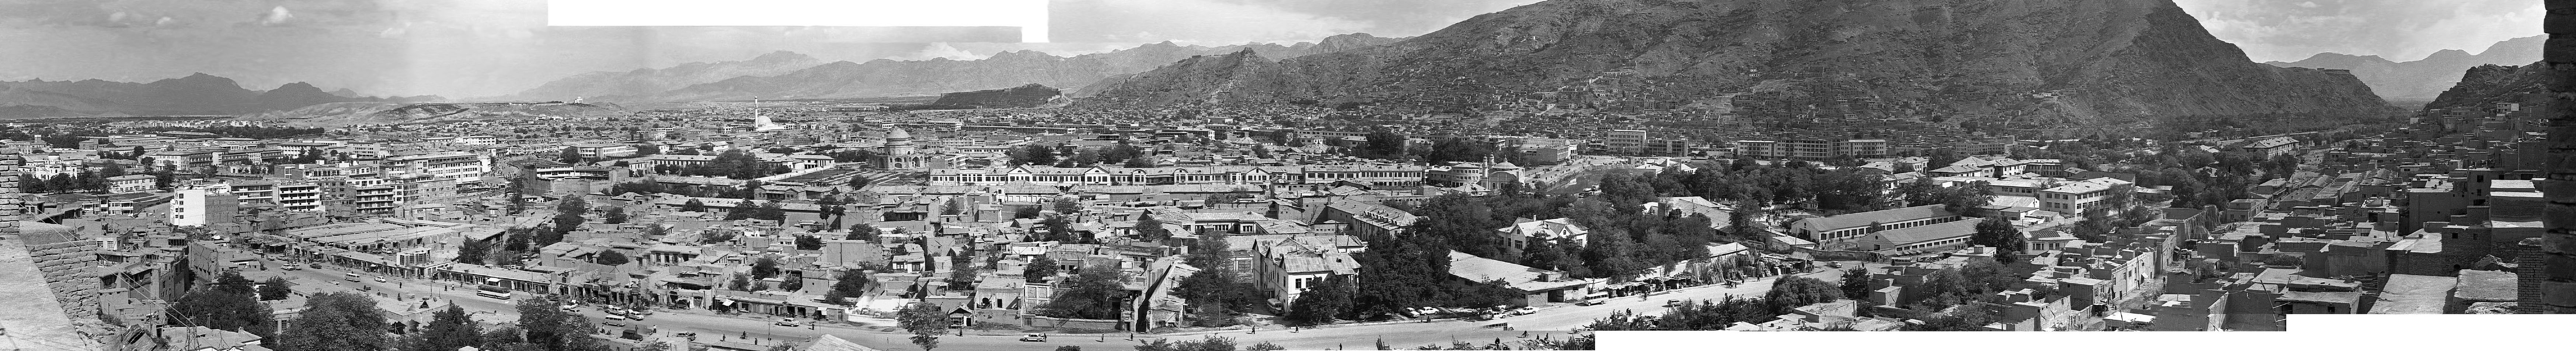 Kabul  - A panorama of Kabul taken by Brad Child in 1970.